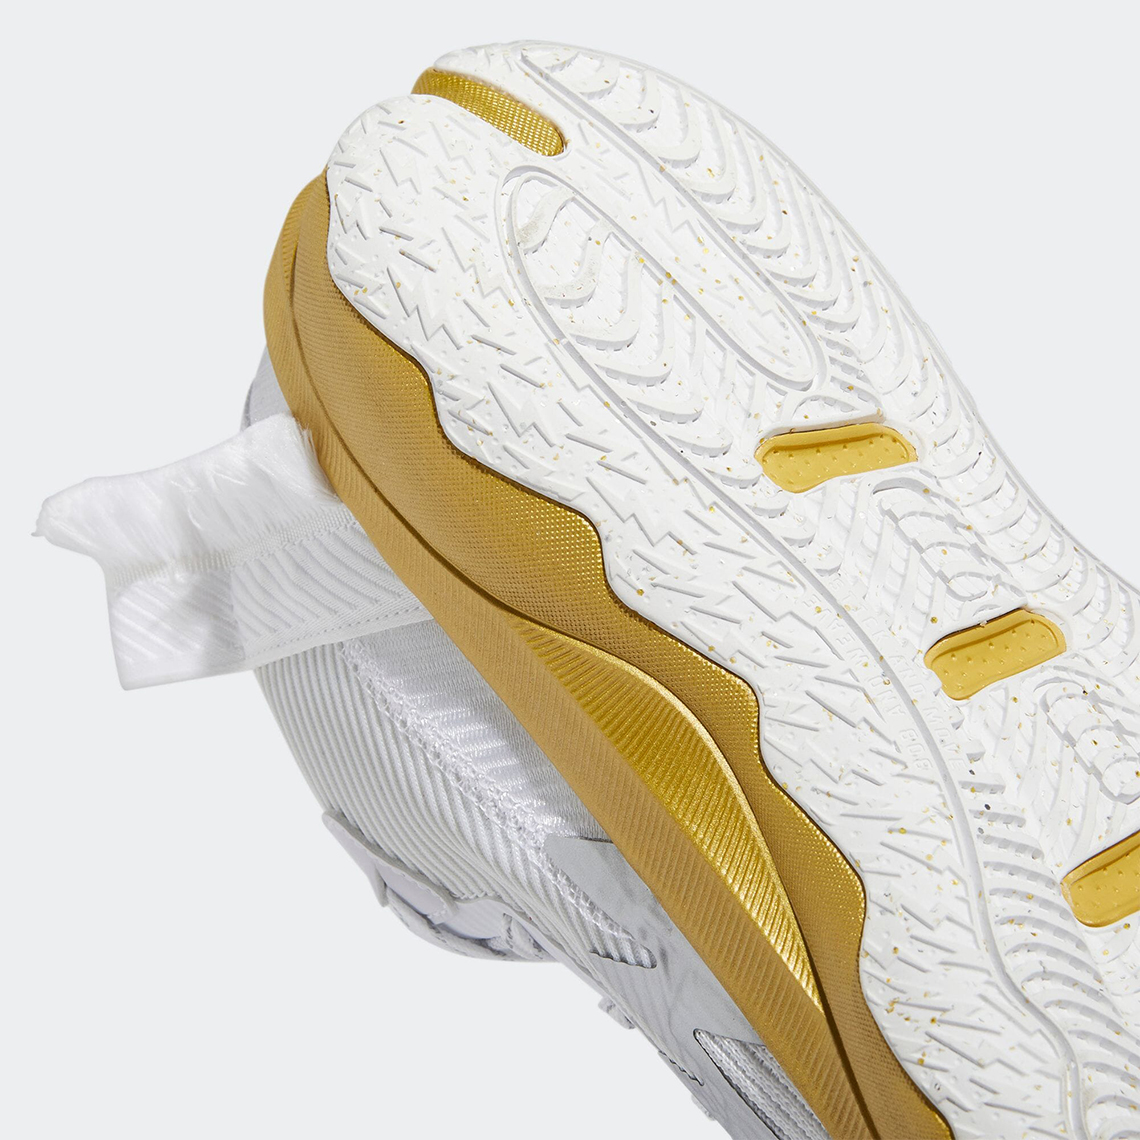 Adidas Dame 8 White Gold Gy1755 7